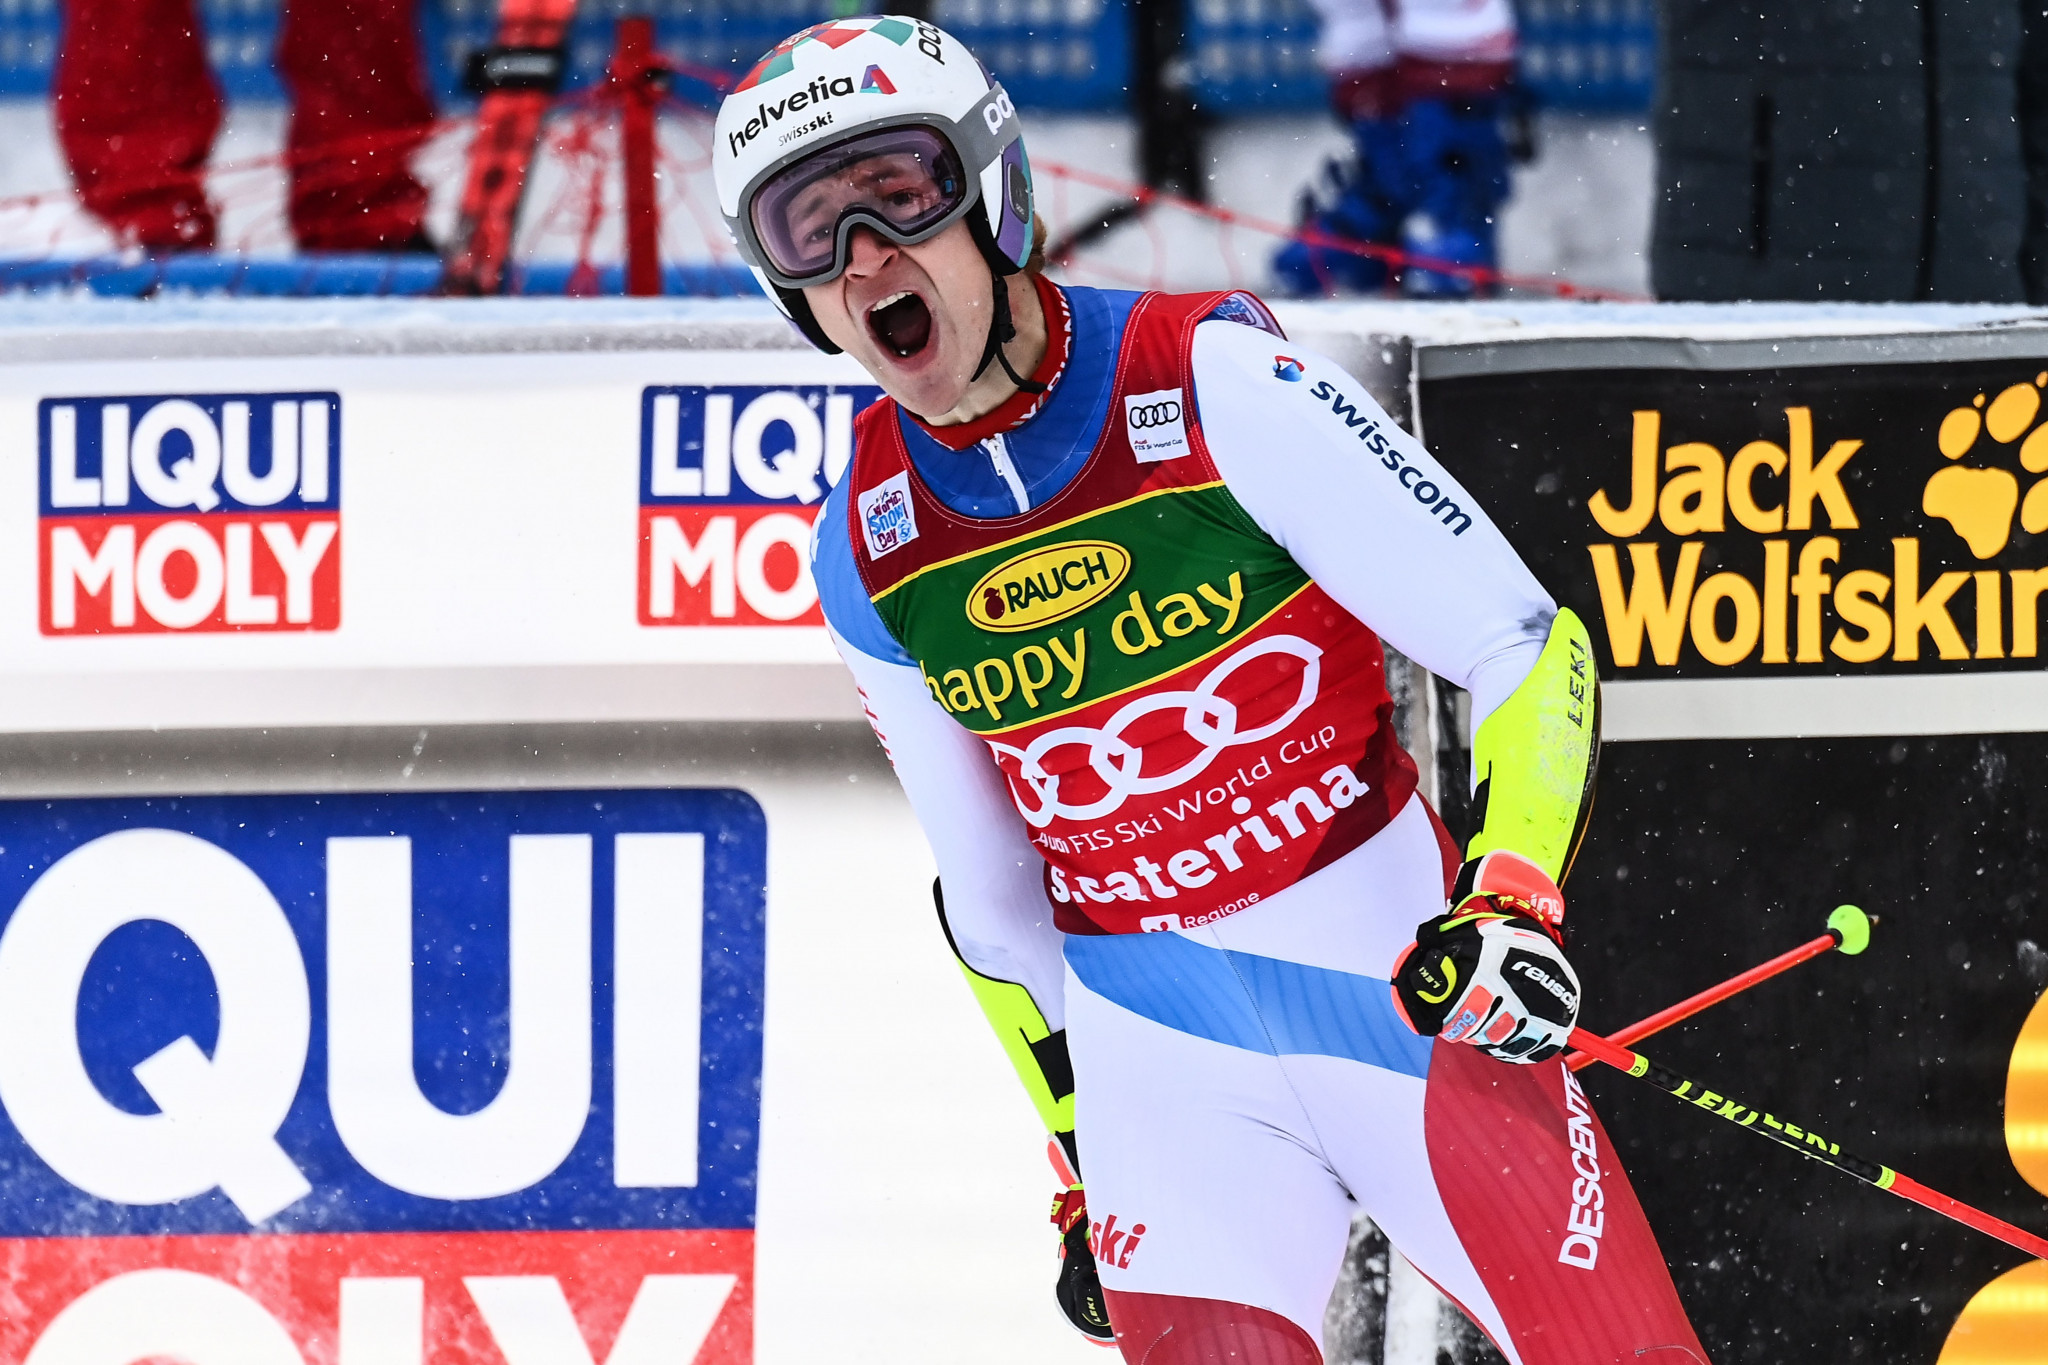 Odermatt wins first giant slalom World Cup win in delayed race in Santa Caterina